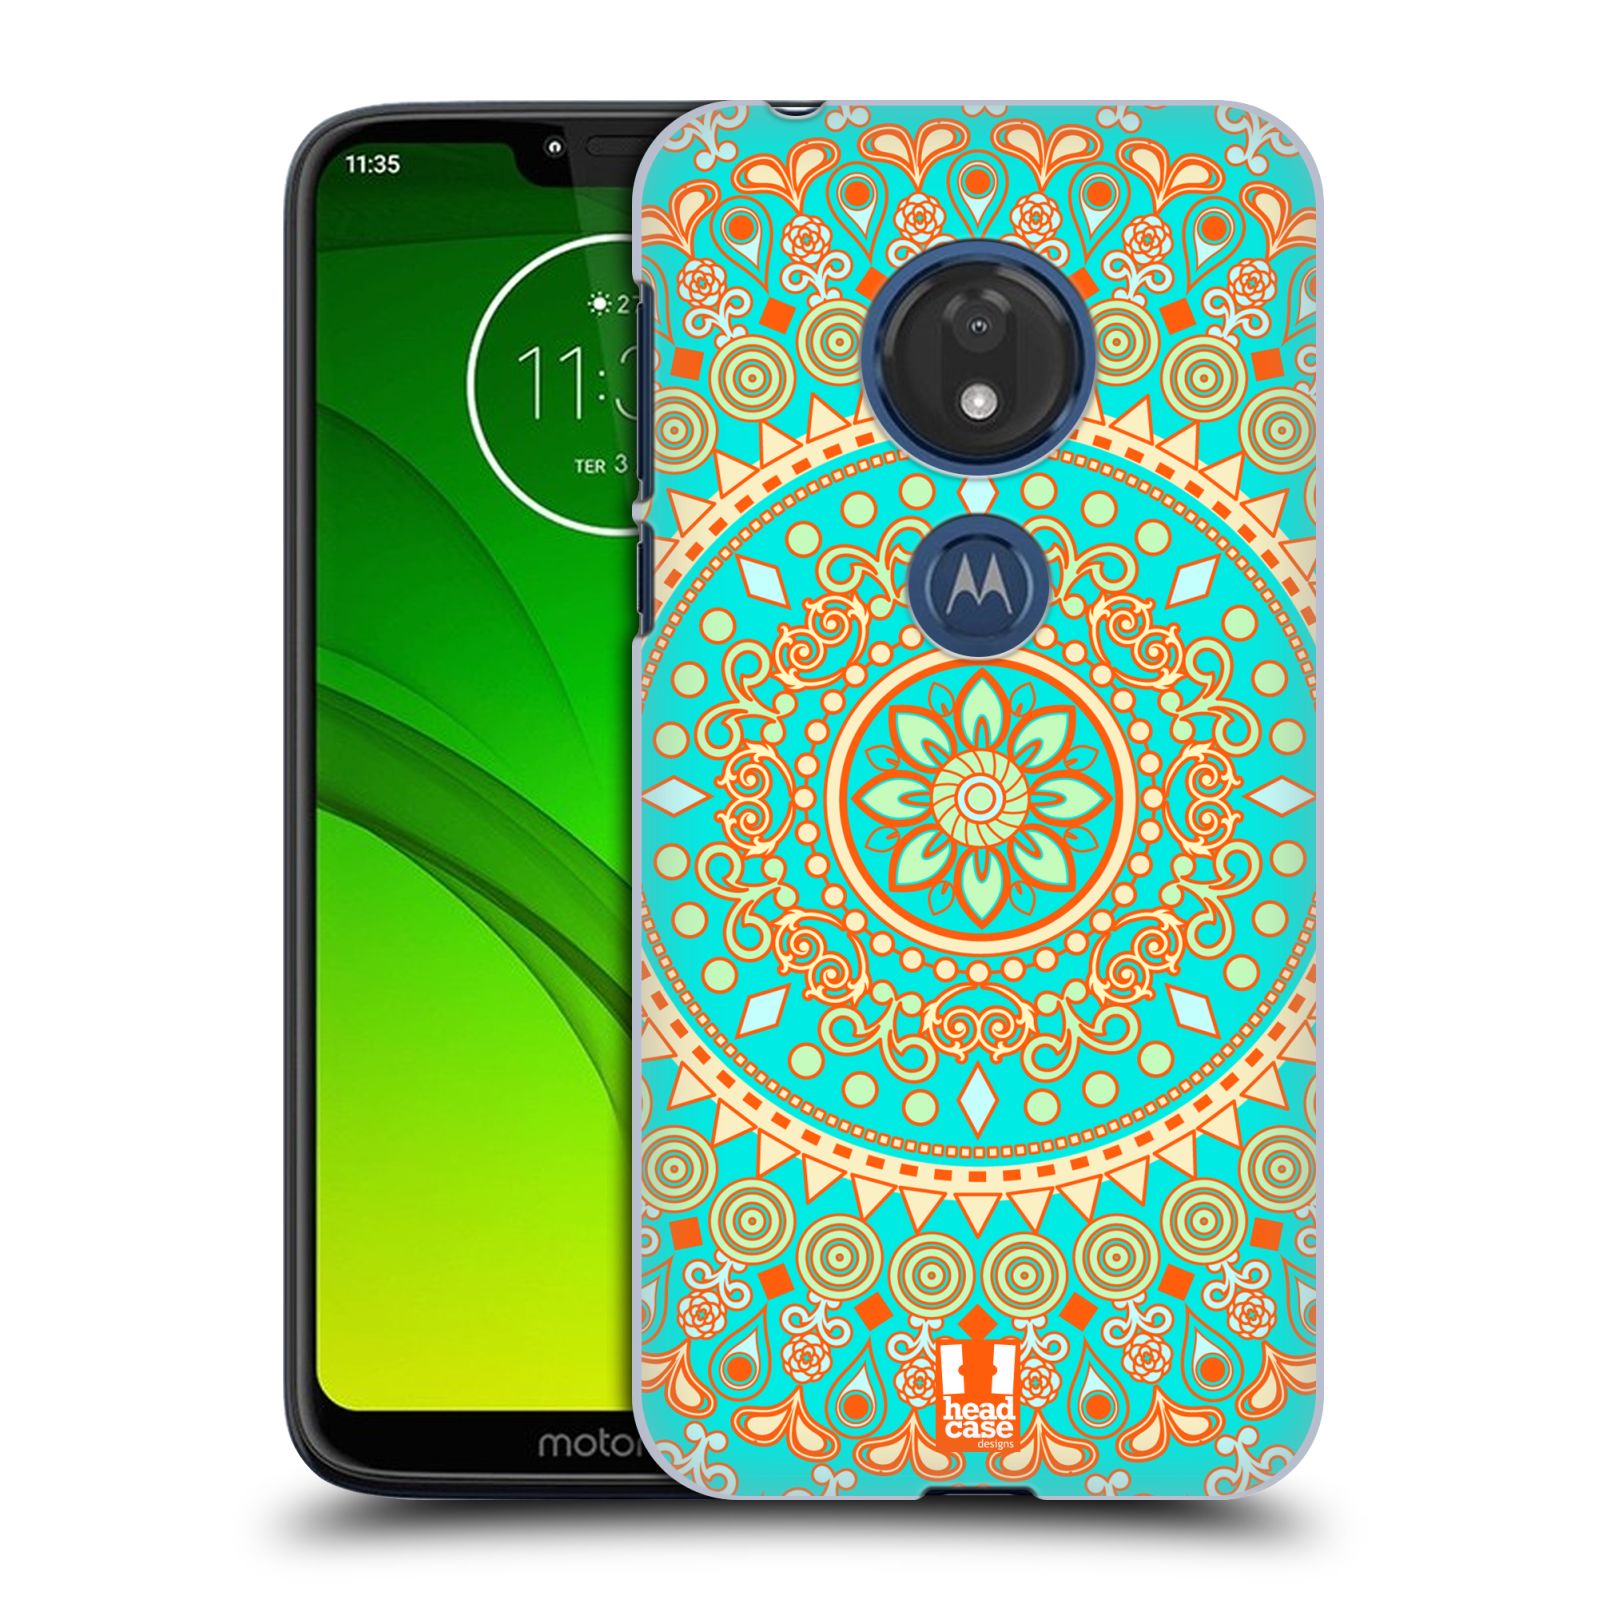 Pouzdro na mobil Motorola Moto G7 Play vzor Indie Mandala slunce barevný motiv TYRKYSOVÁ, ZELENÁ